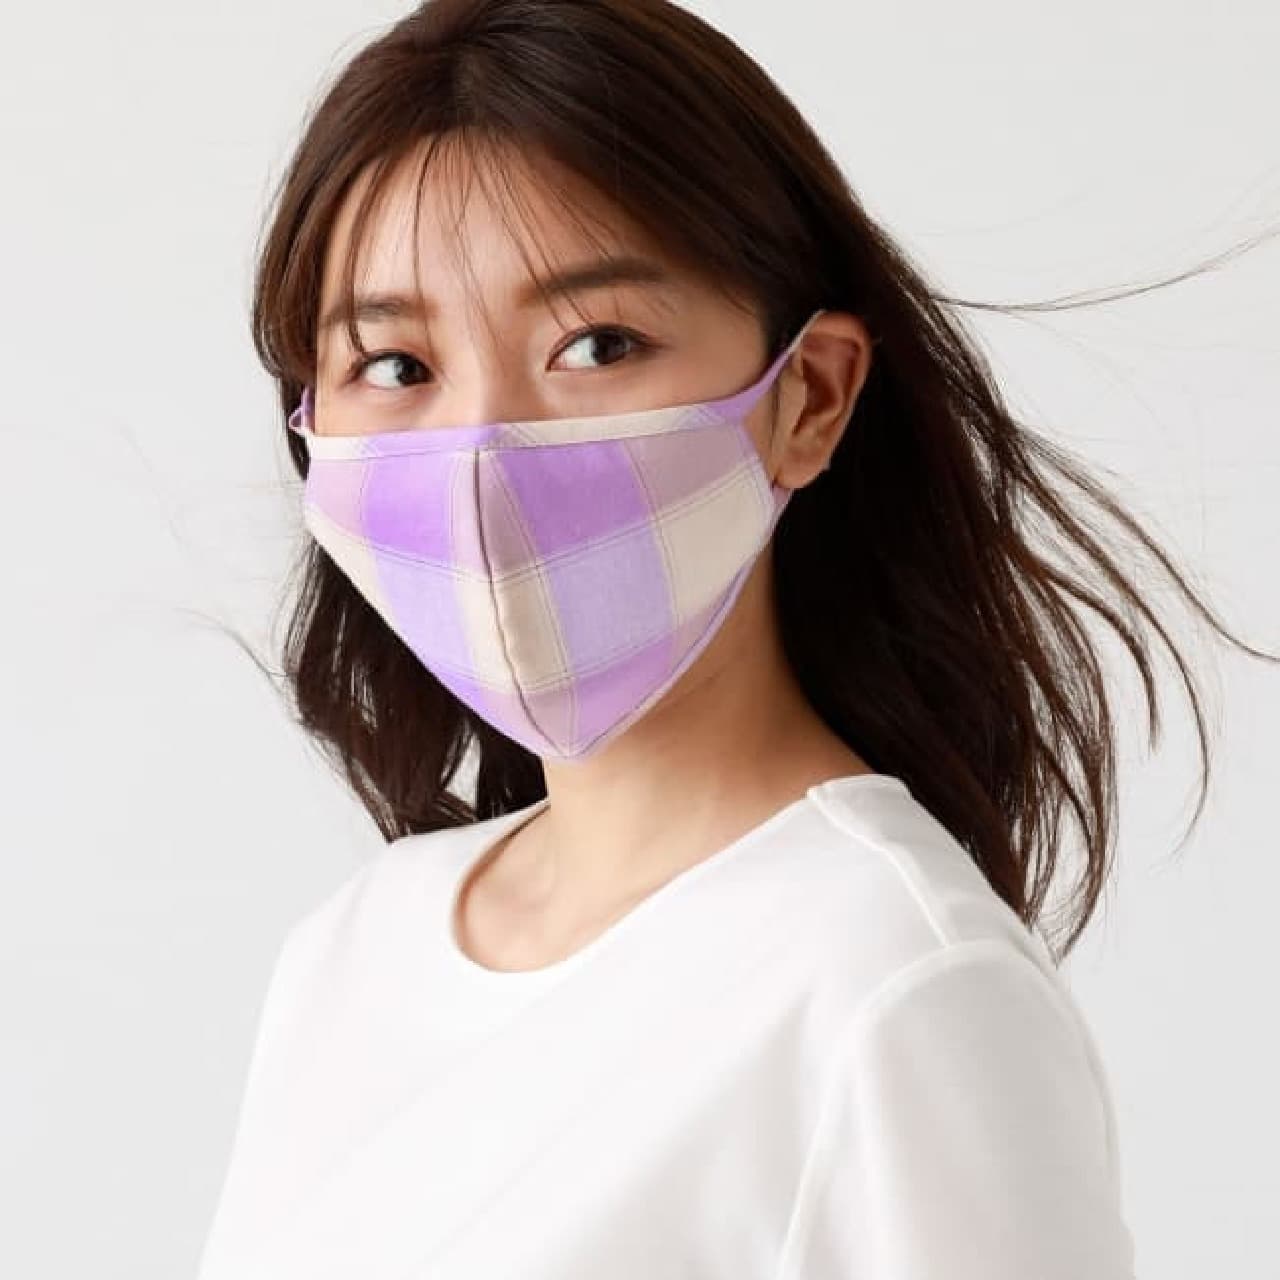 The second original cloth mask product from Sanyo Shokai